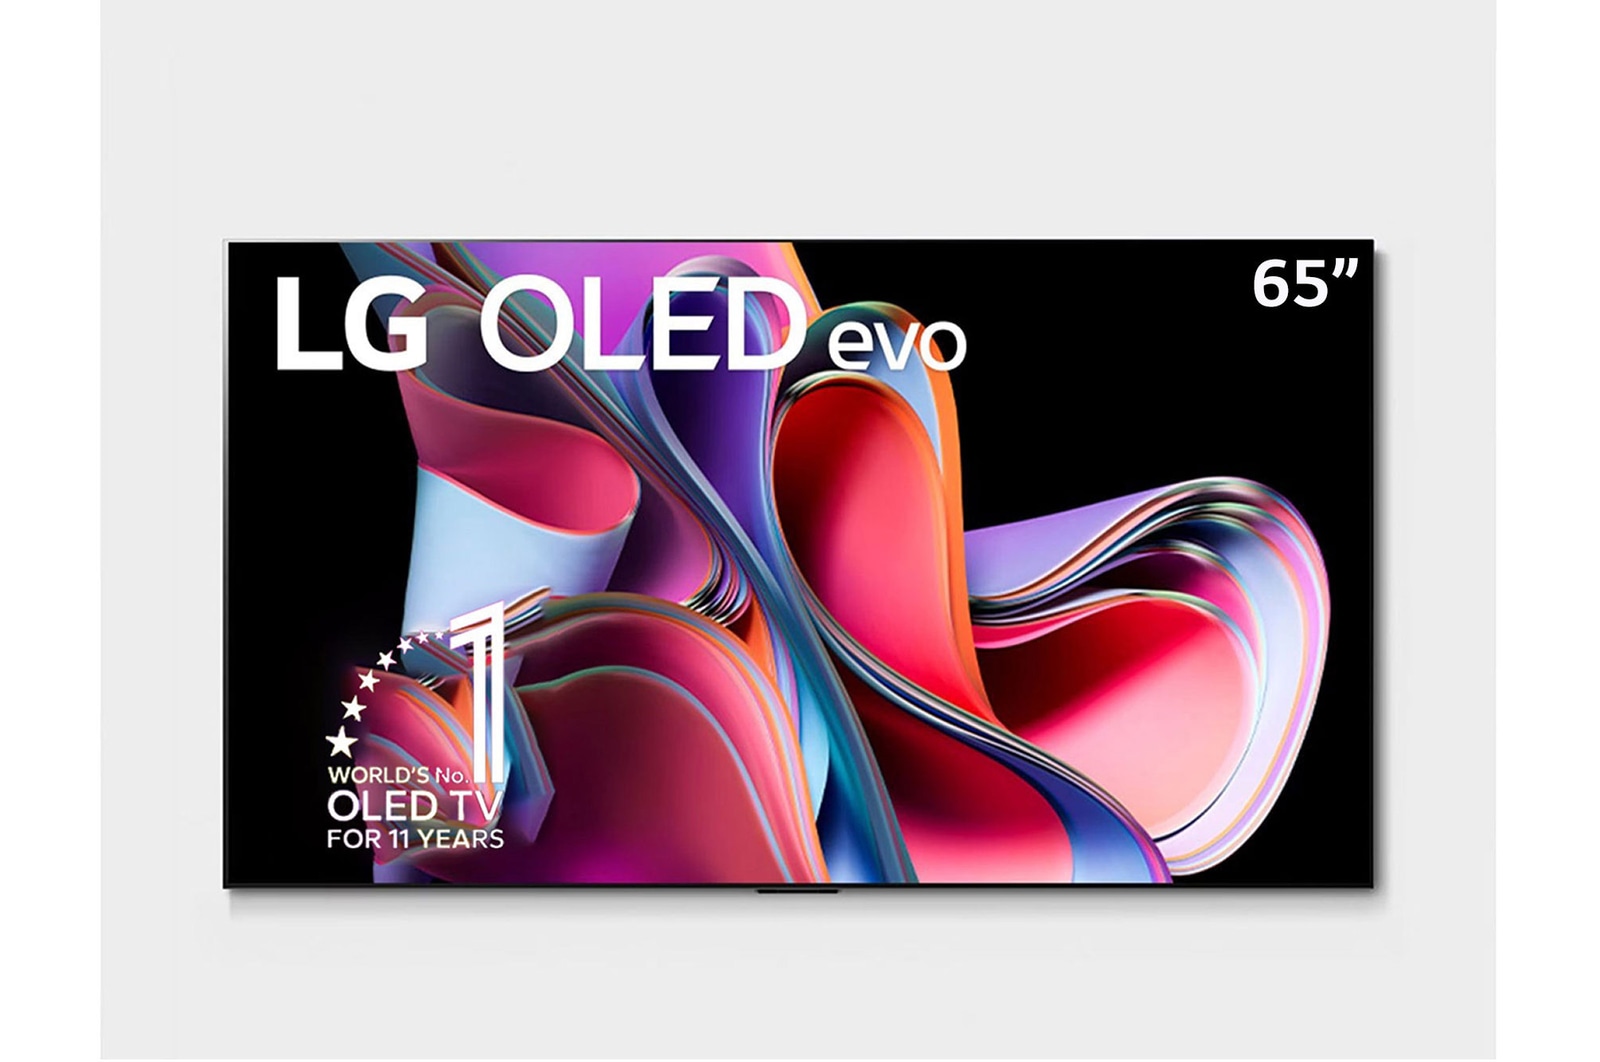 LG Televisor LG 65" OLED evo | 4K |  Procesador AI α9 | Smart TV  |Ultra delgado|Diseño de arte|Incluye  Magic remote, OLED65G3PSA